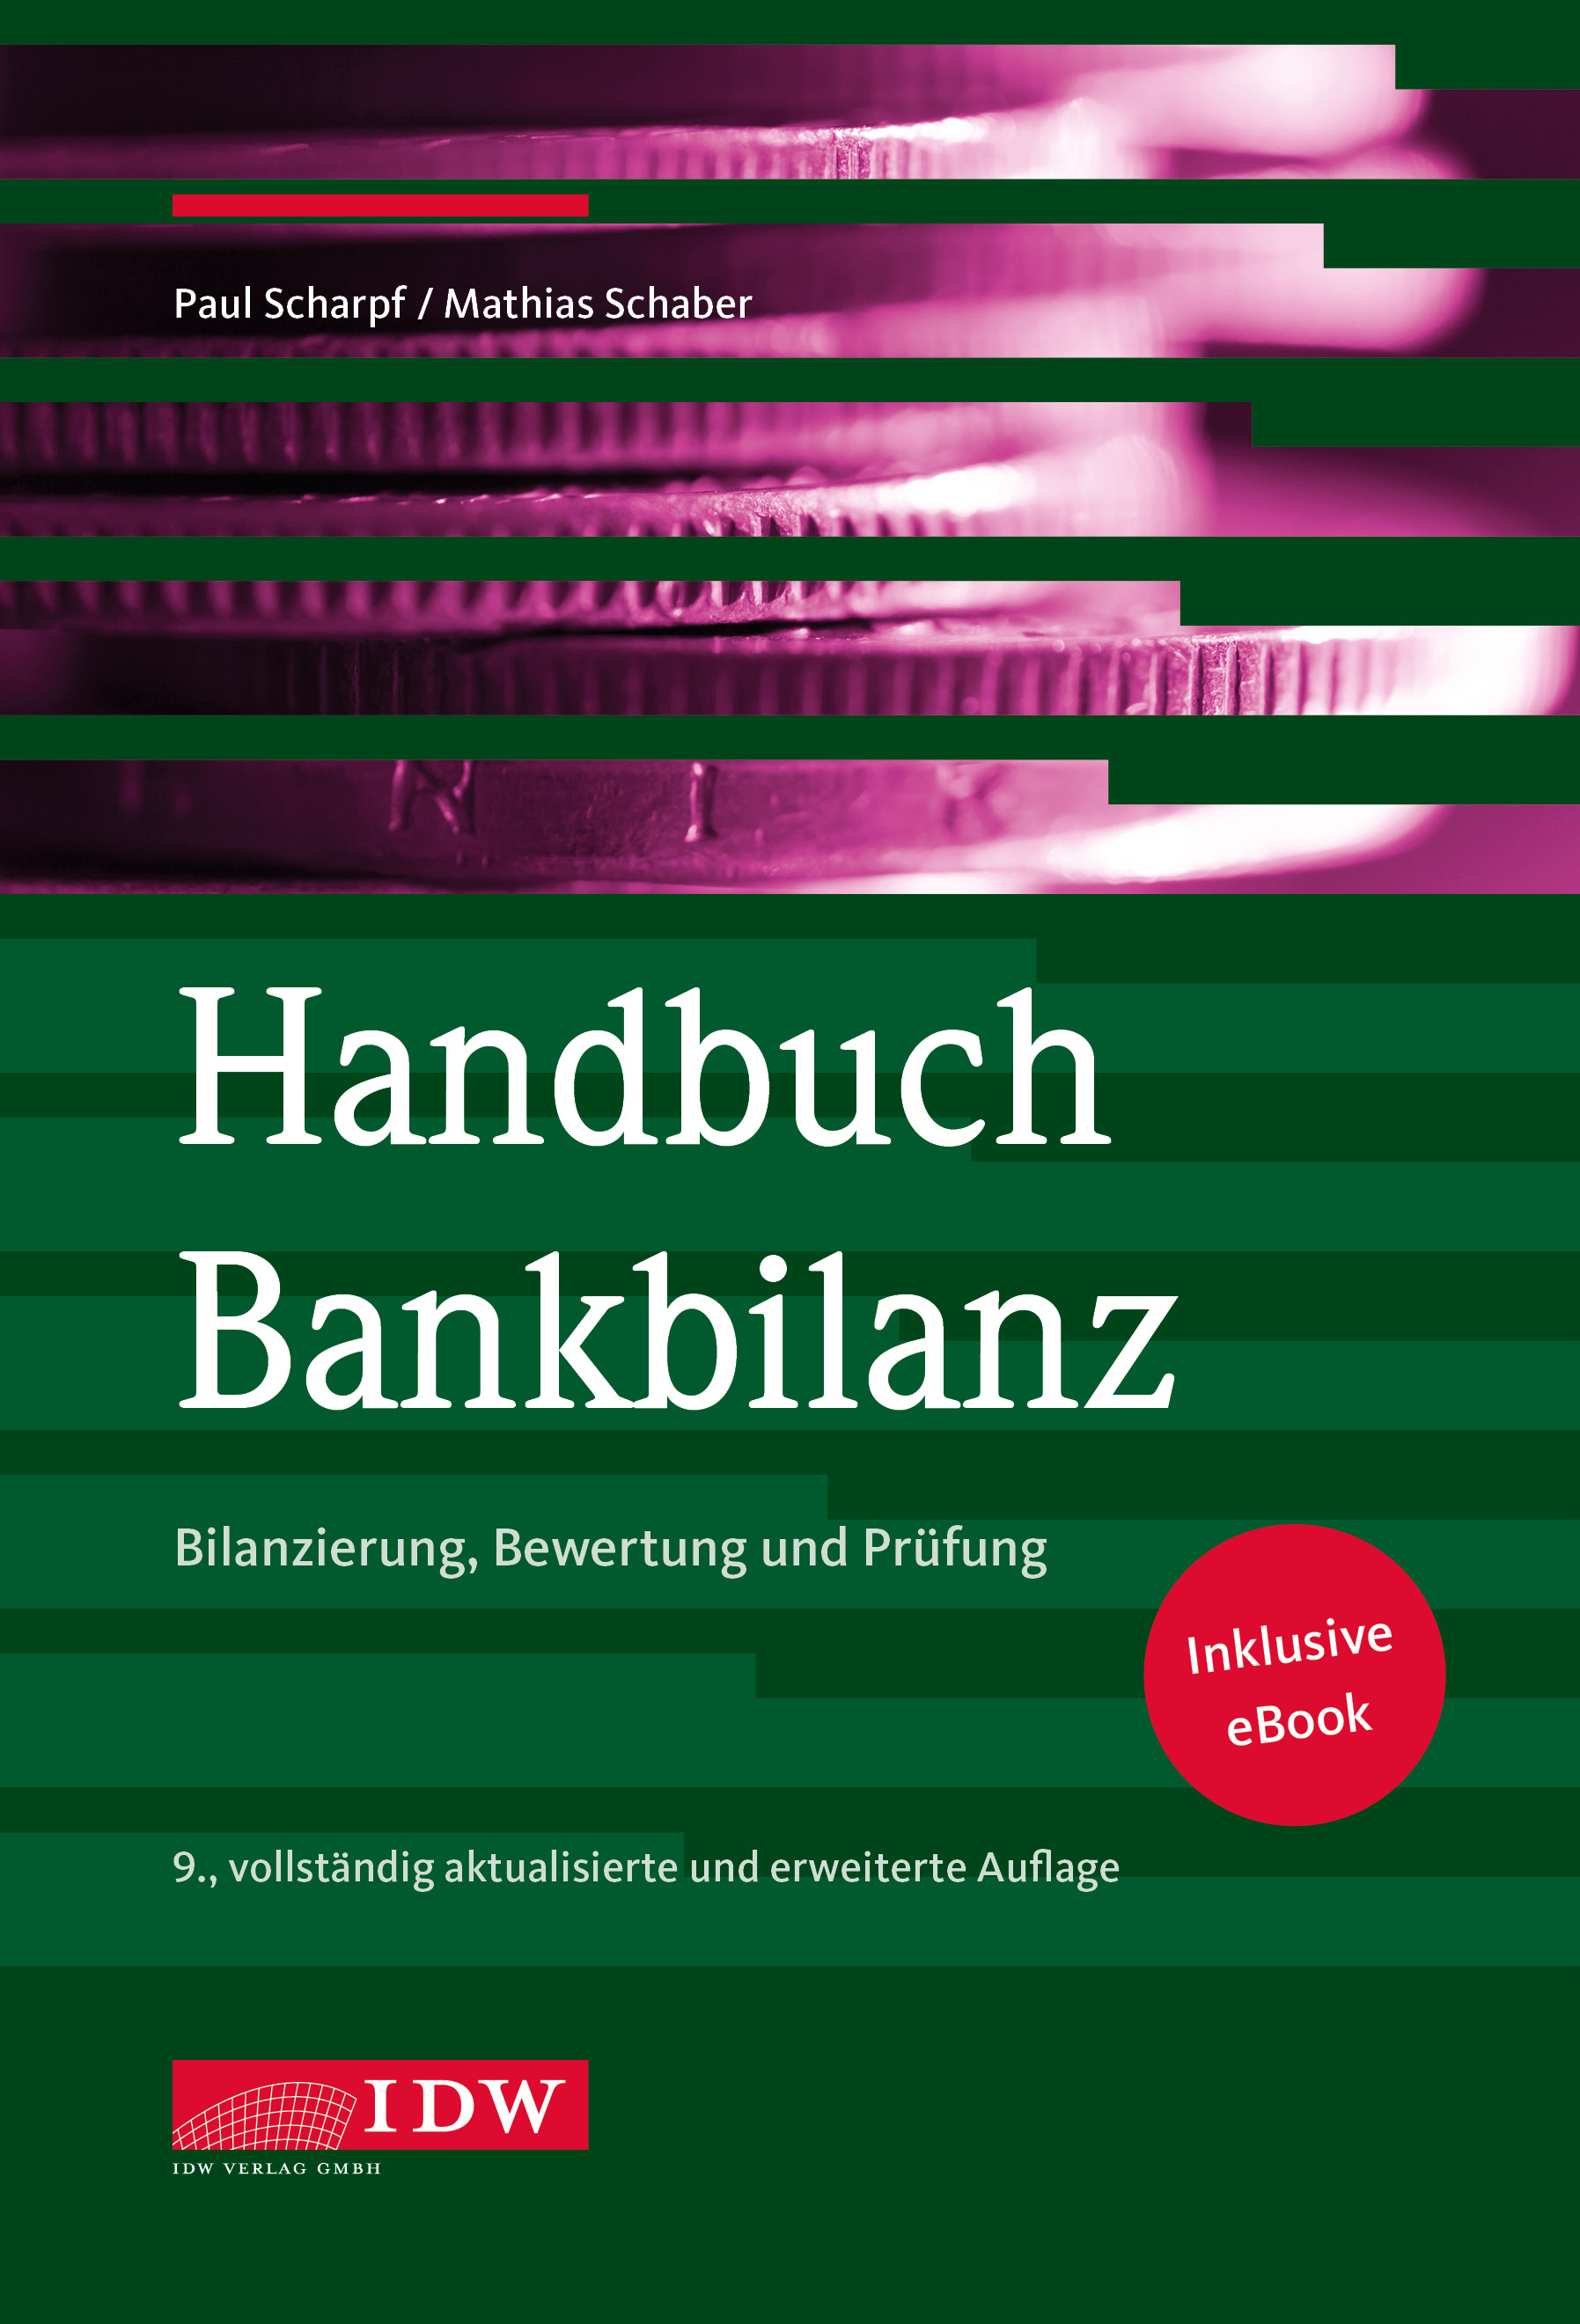 Handbuch Bankbilanz 